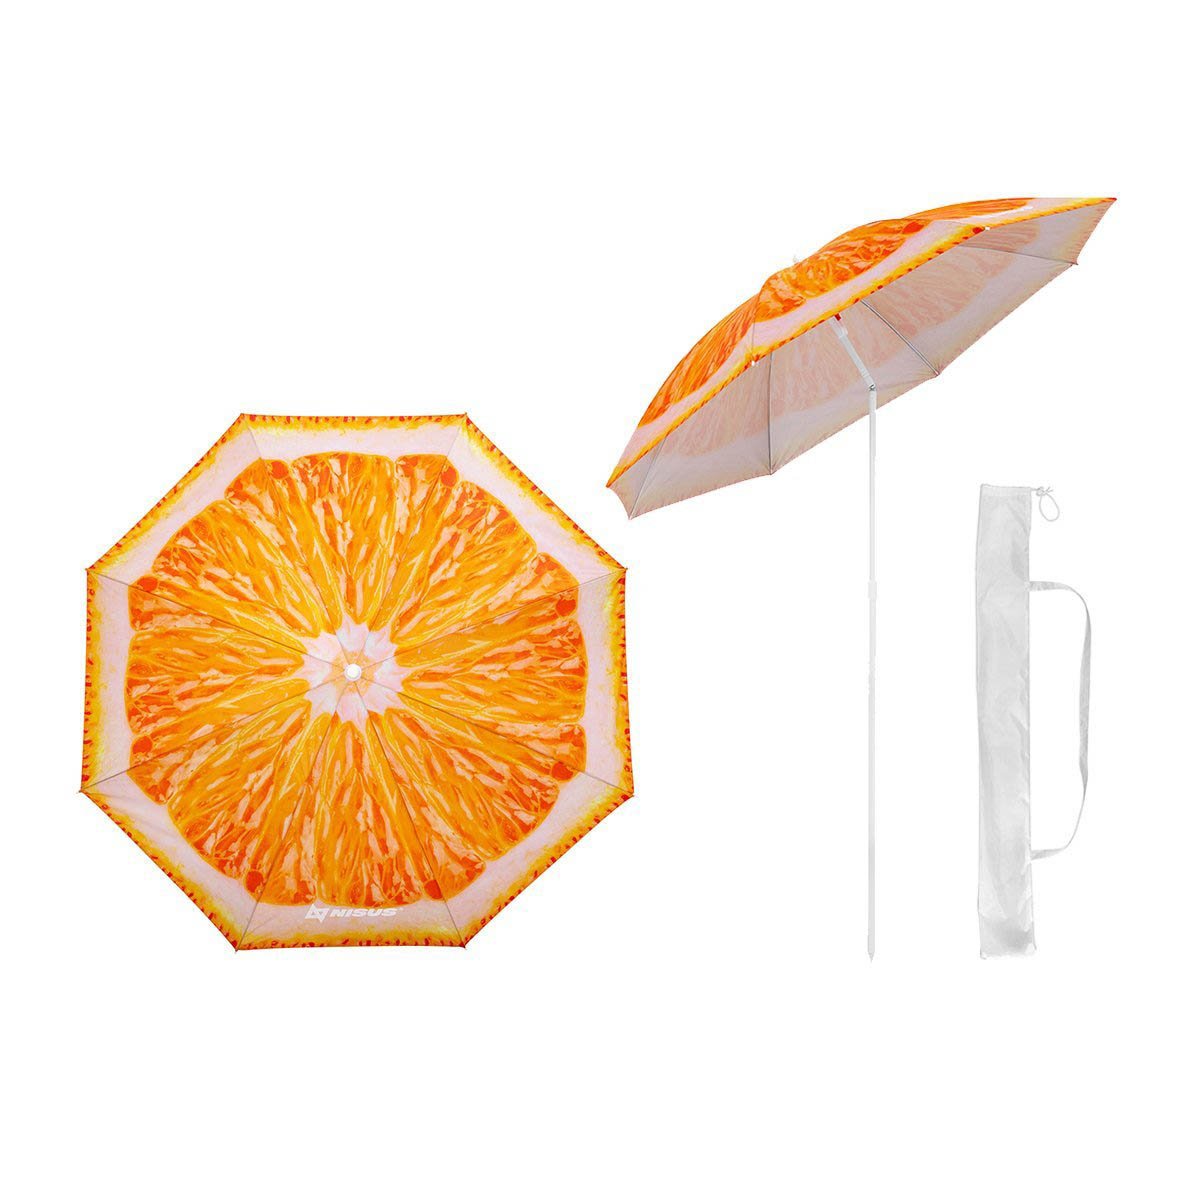 Orange Folding Tilting Beach Umbrella with Carry Bag